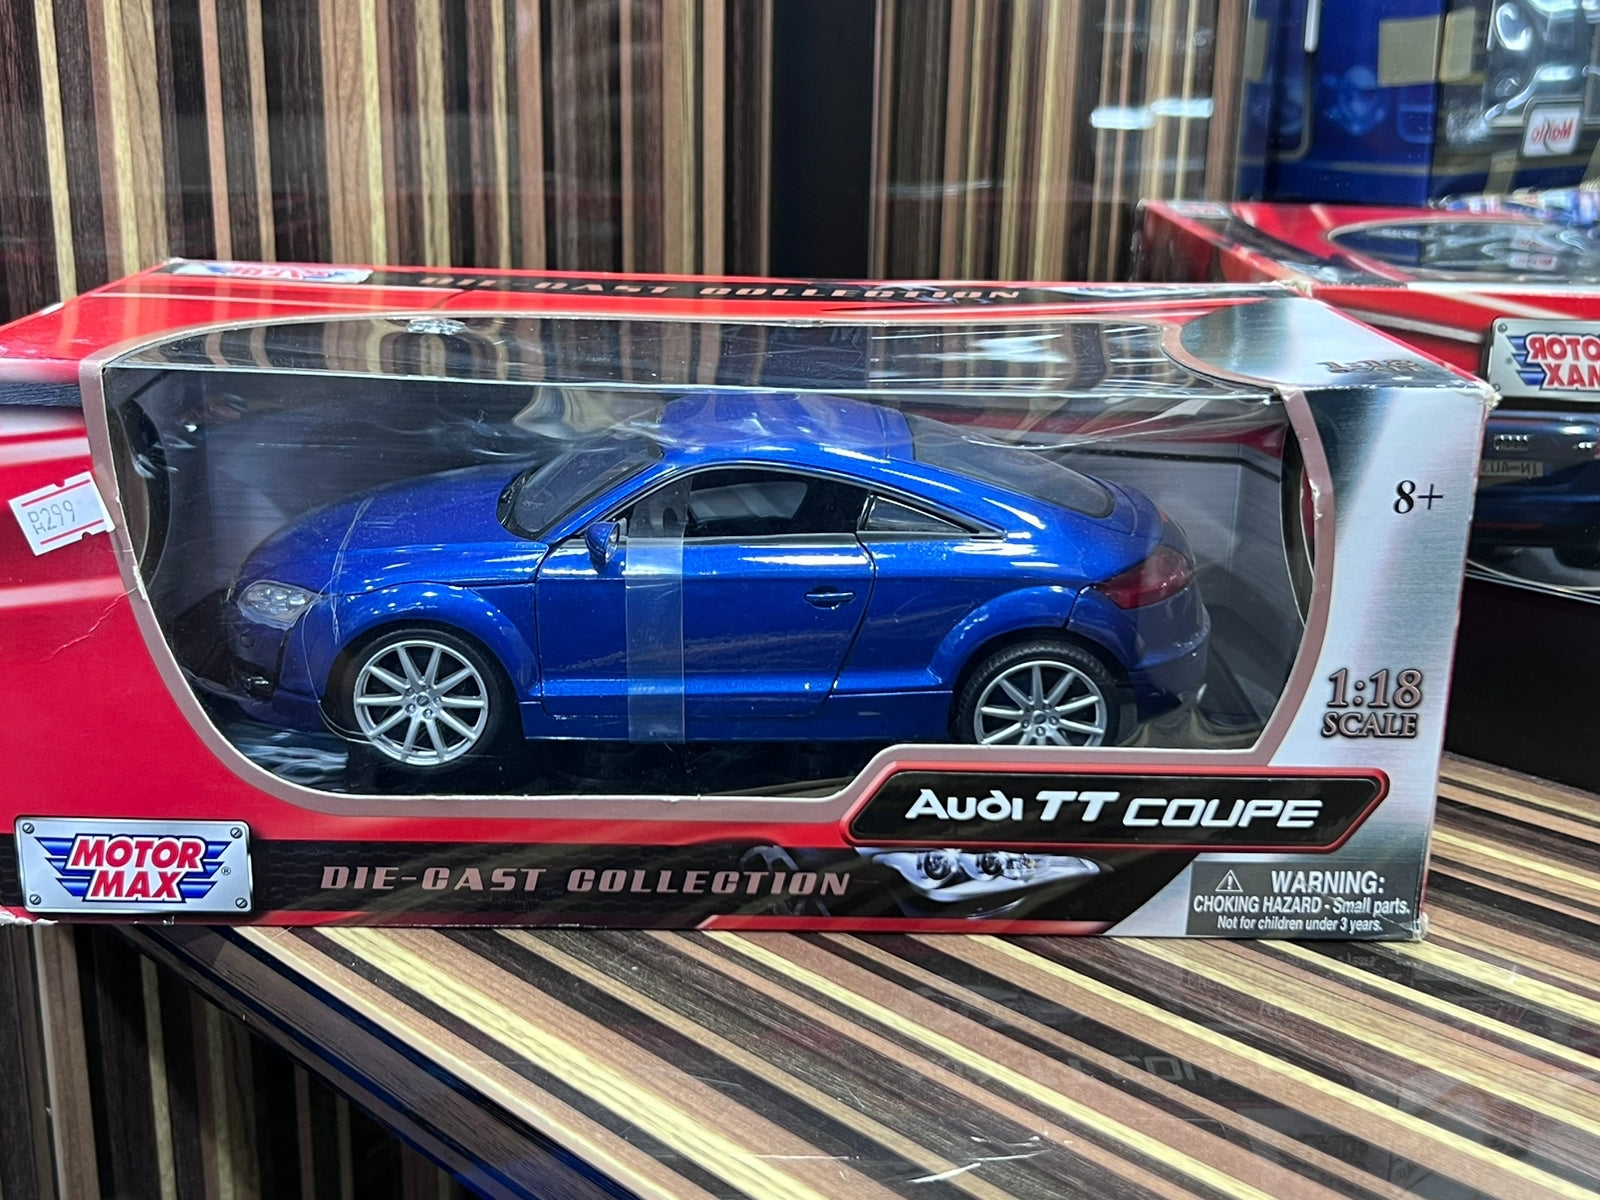 1/18 Audi TT Coupe 1/18 Diecast car Blue by Motormax